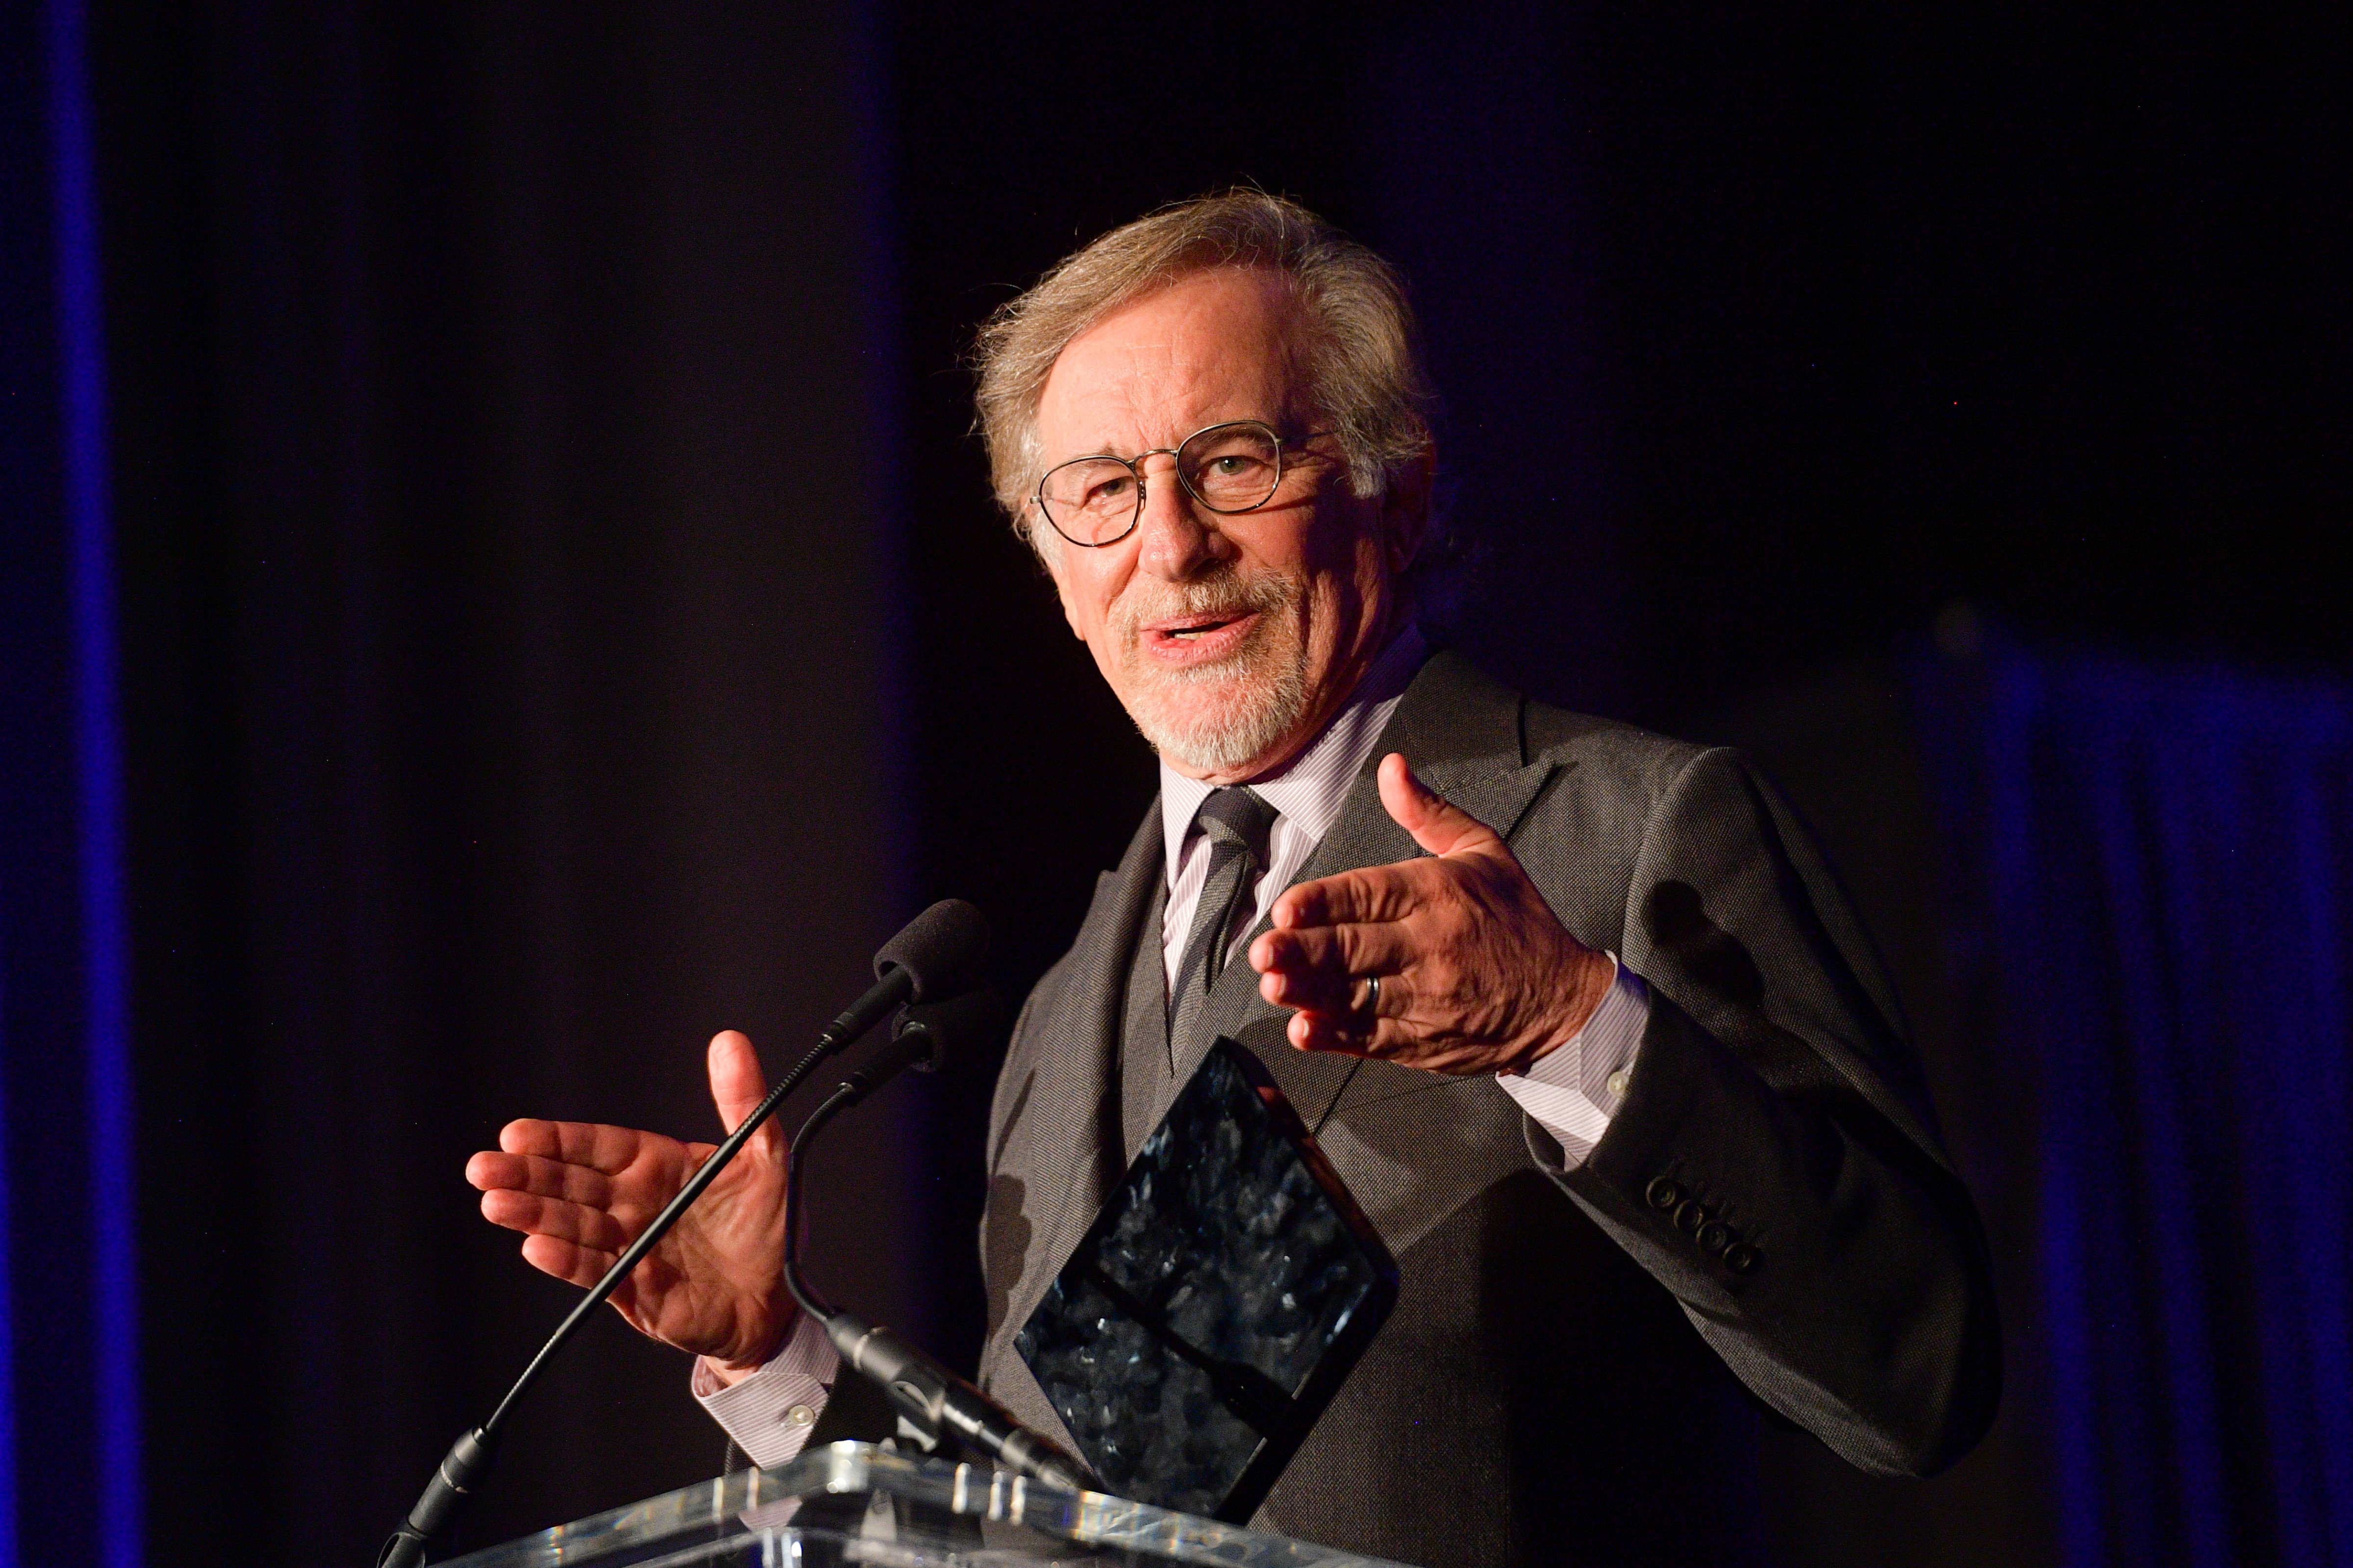 Steven Spielberg attends an awards show in Los Angeles, Calif. on Feb. 16, 2019. (Matt Winkelmeyer—Getty Images)